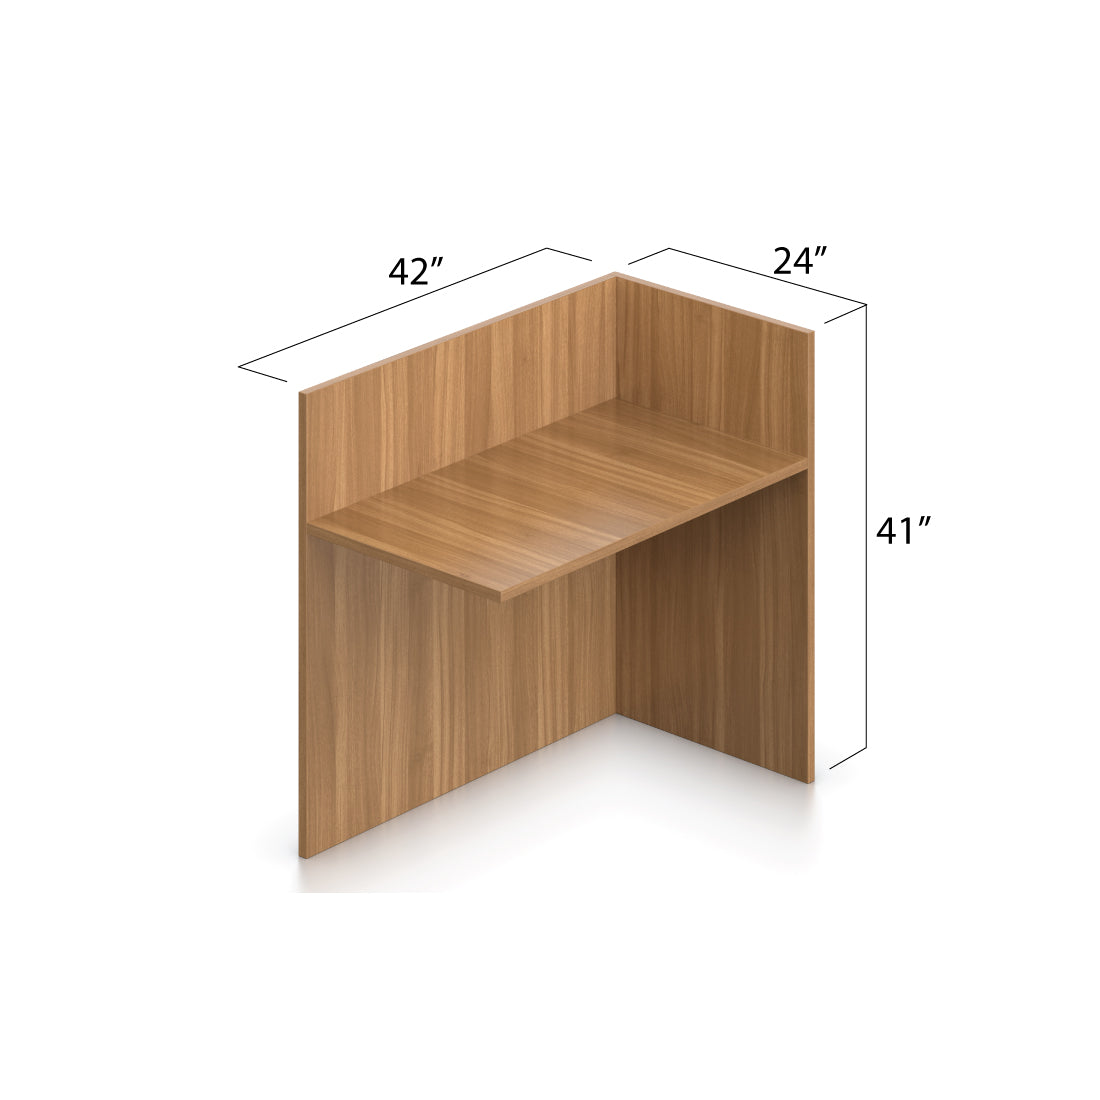 6' x 6' Reception Desk with B/B/F Pedestal - Kainosbuy.com